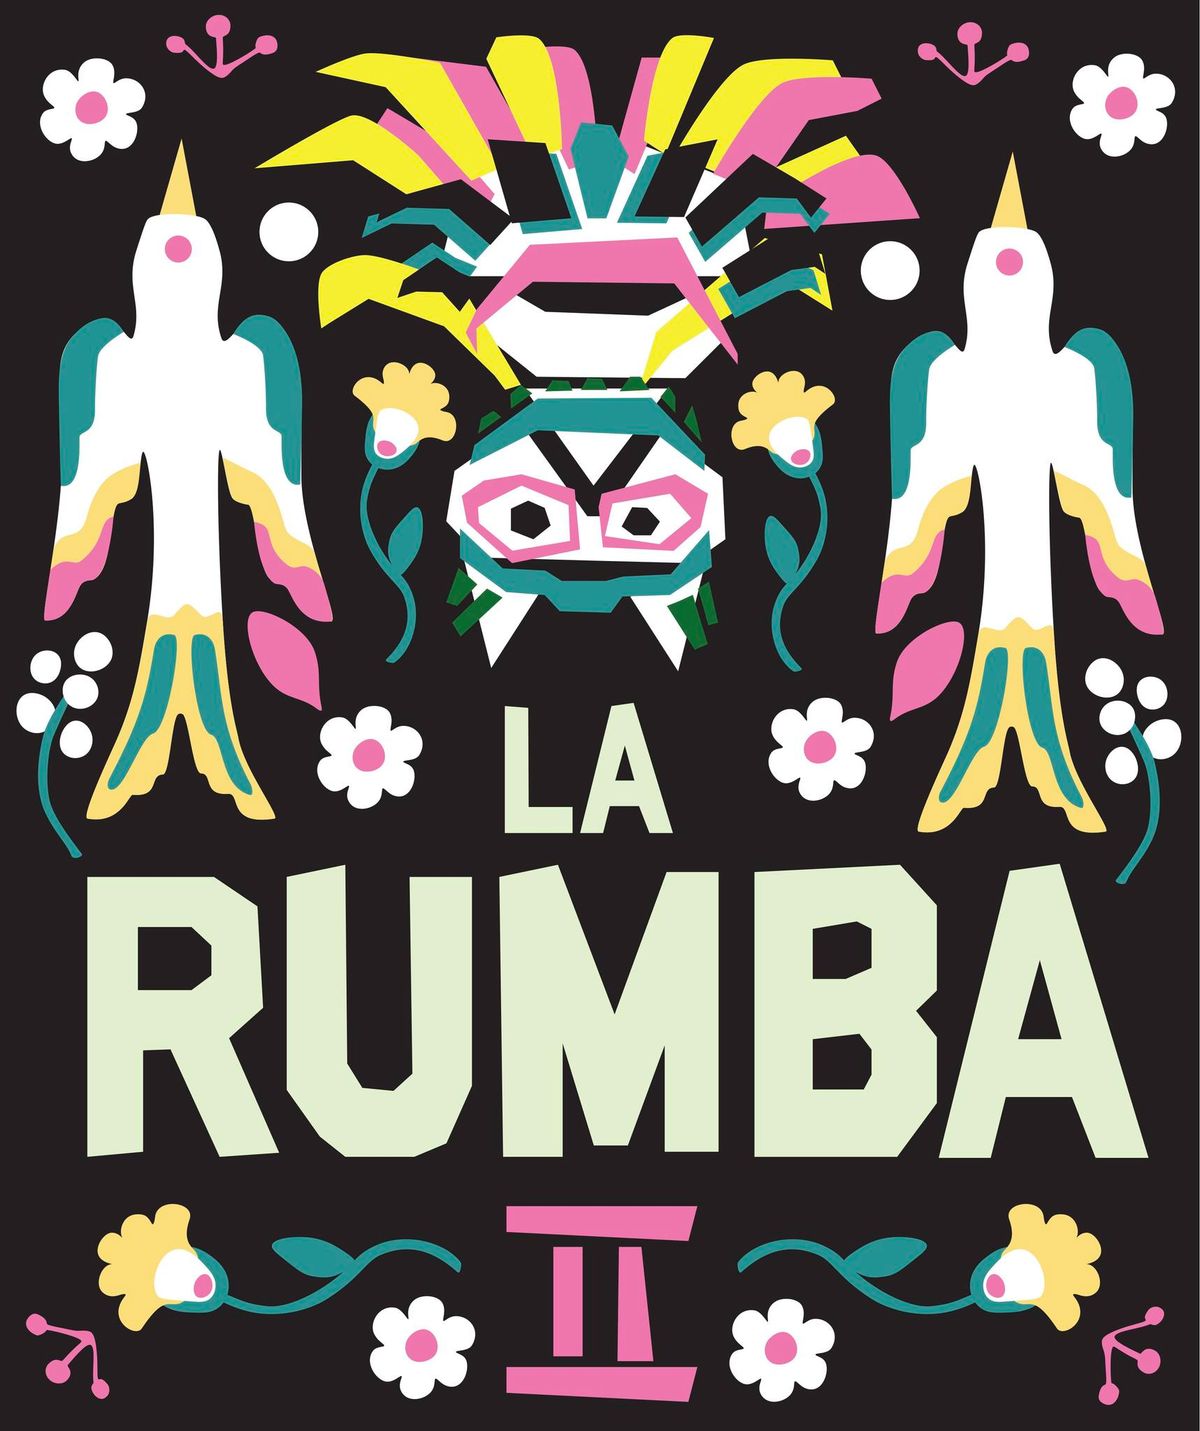 La Rumba II - Oxford\u2019s Latin music and dance festival